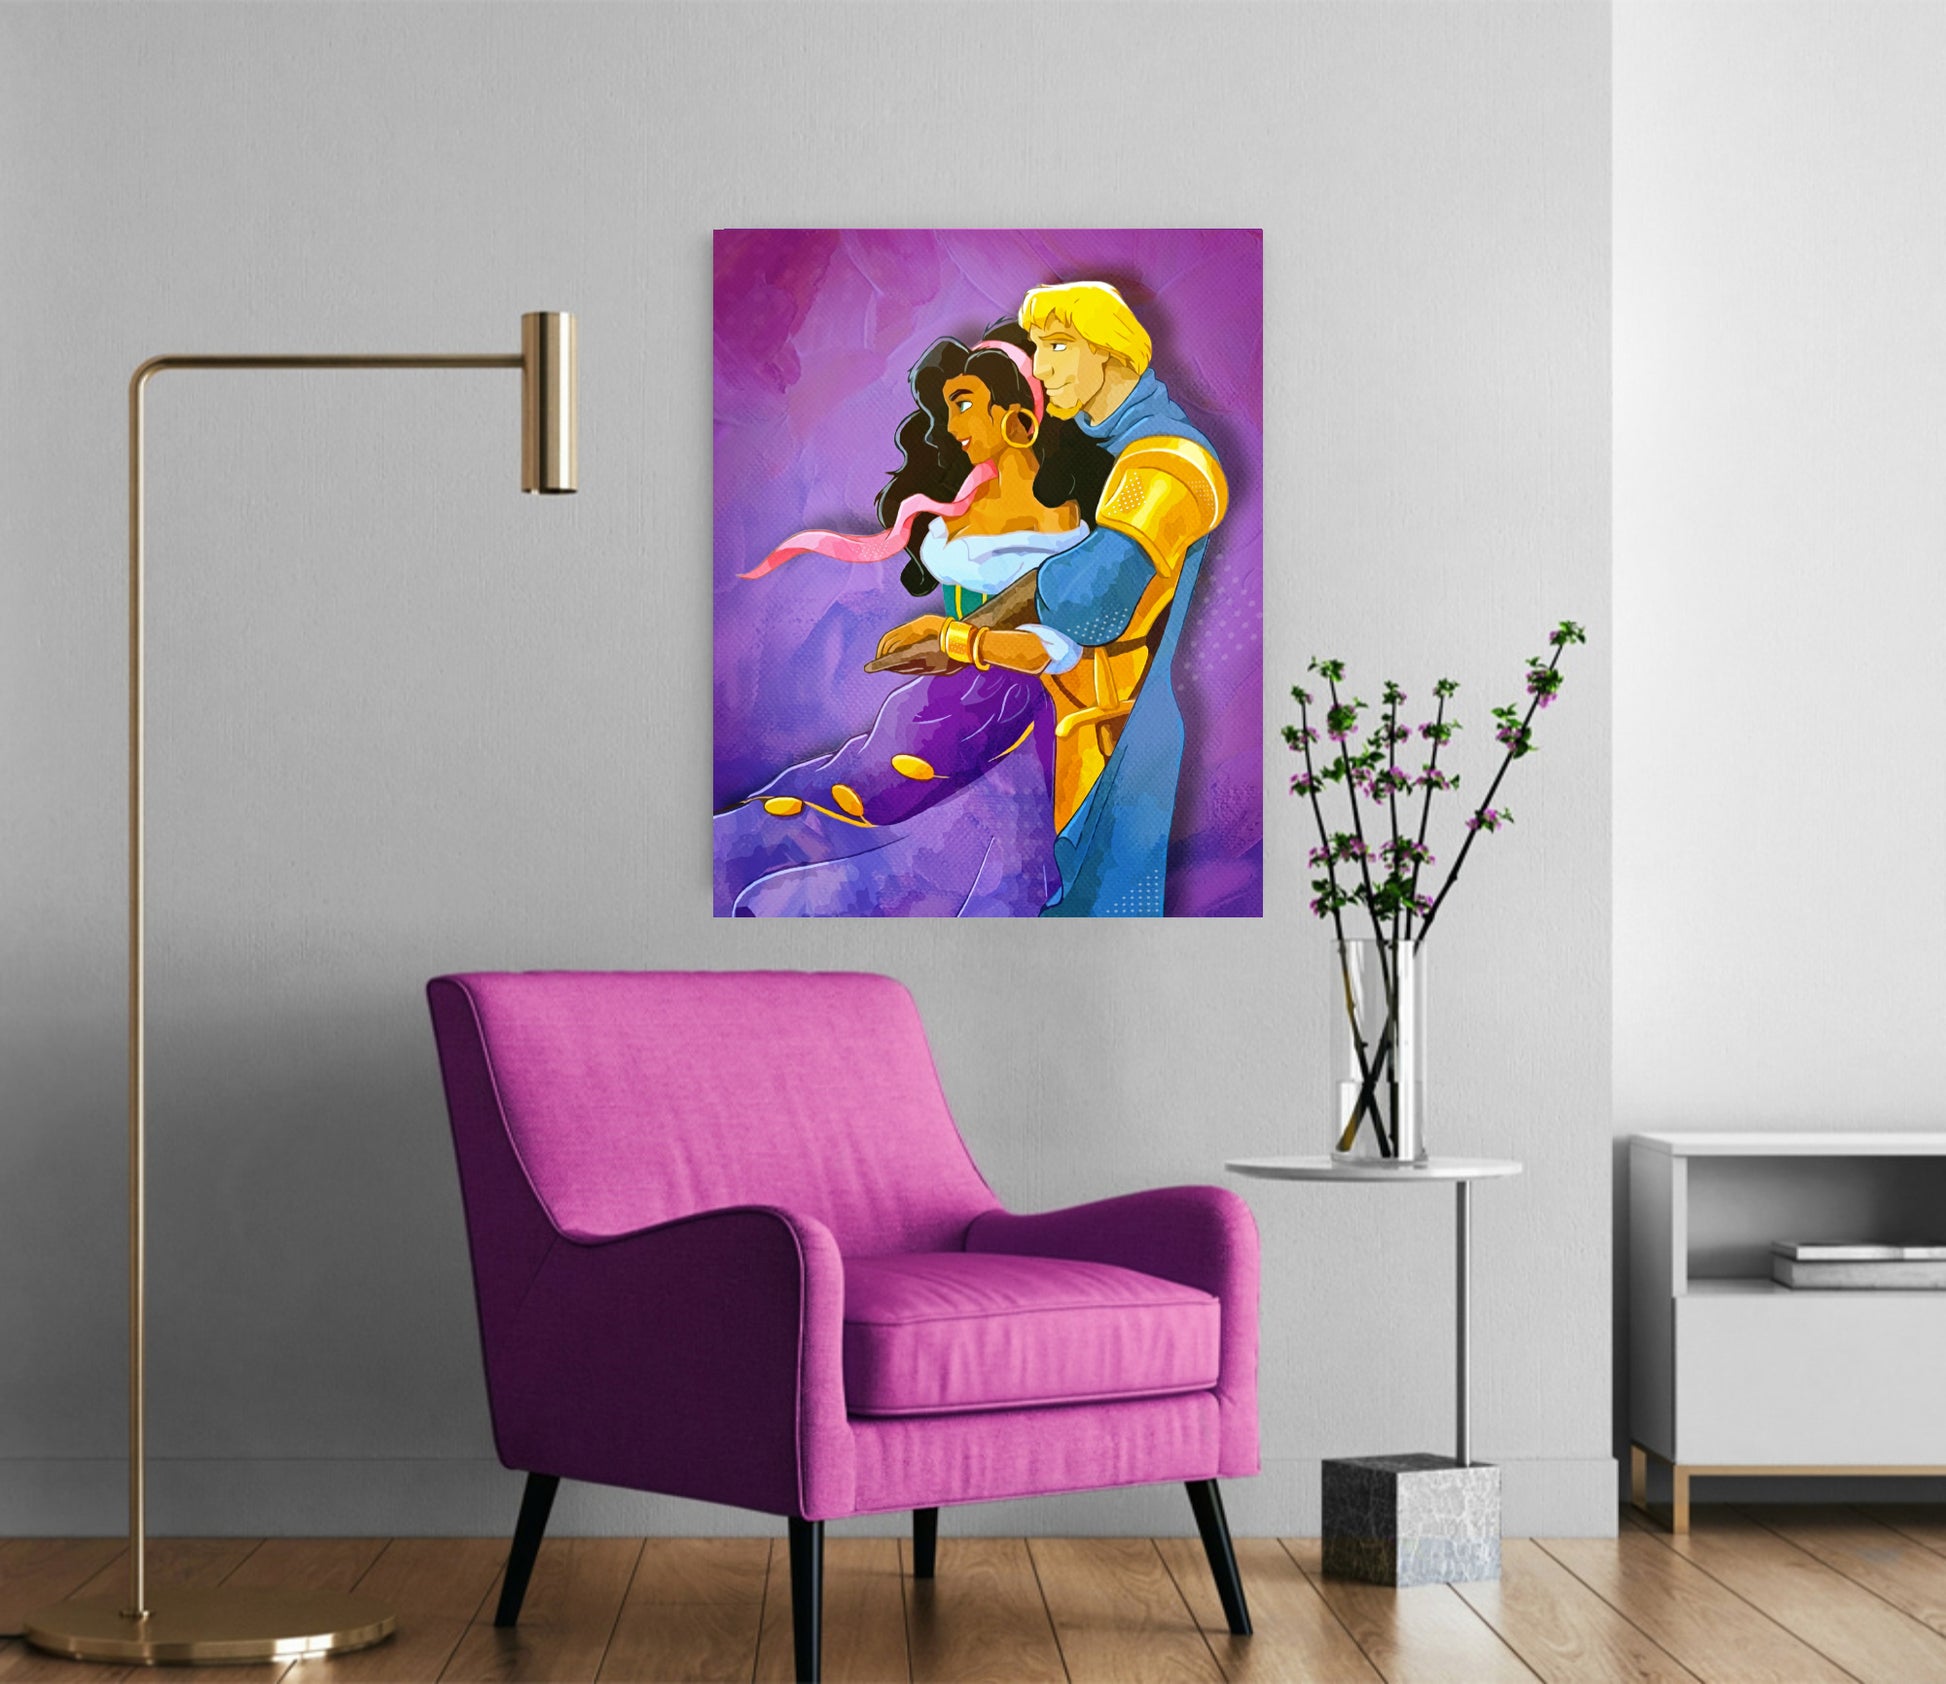 Esmeralda and Phoebus Hunchback of Notre Dame poster